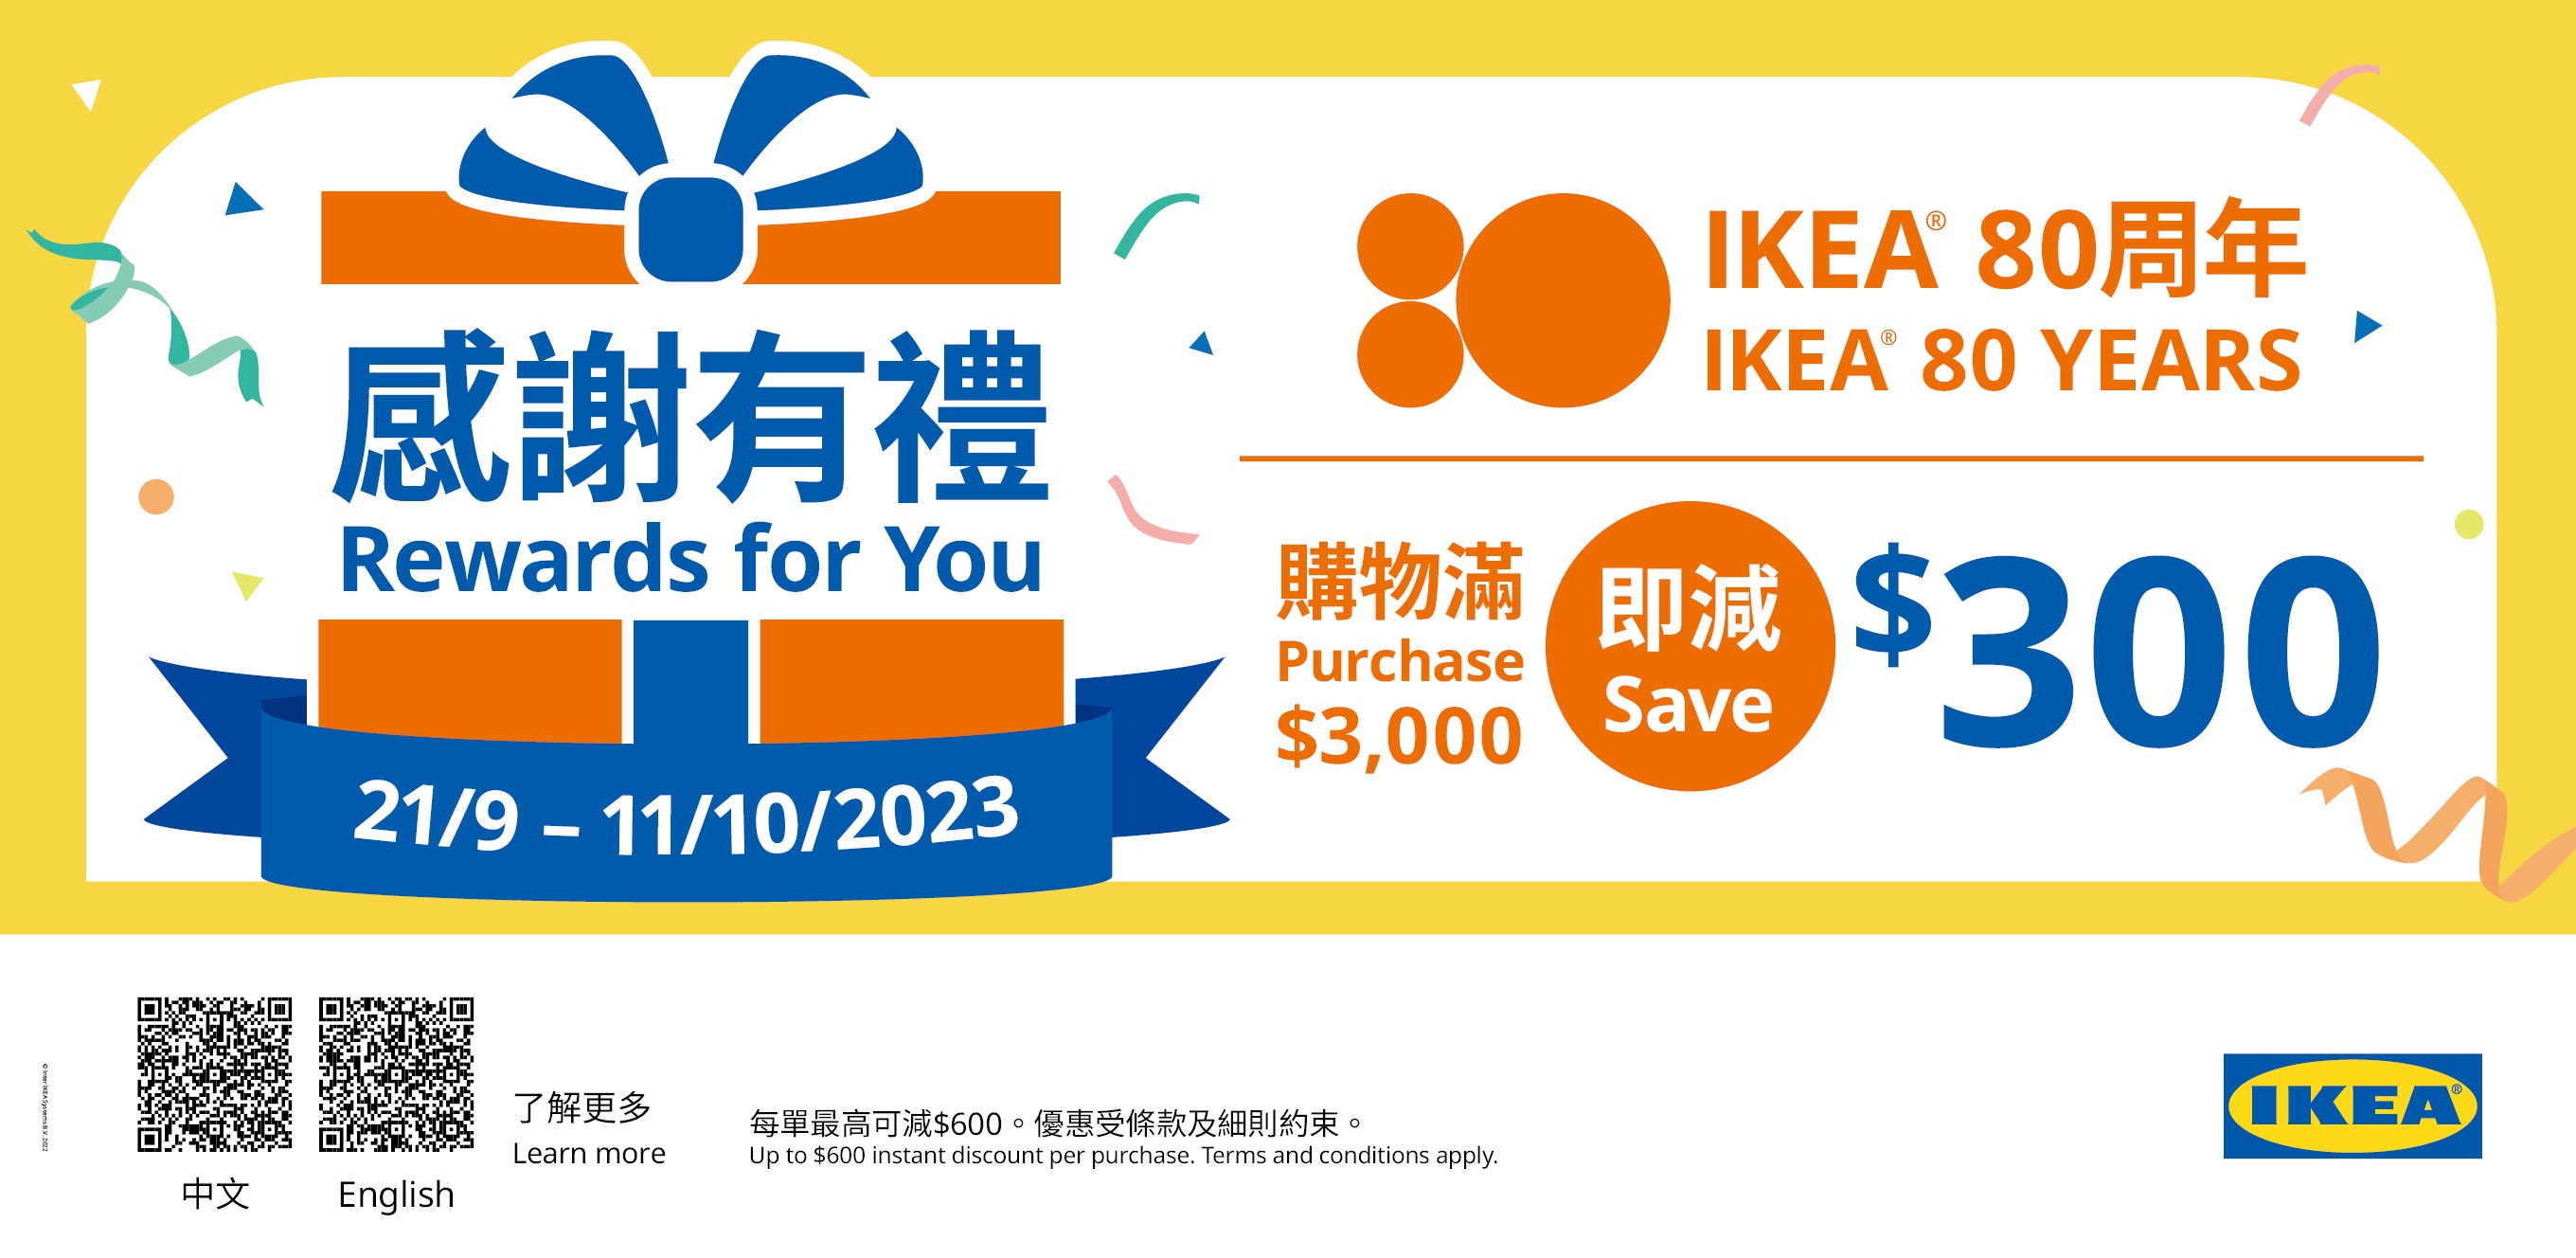 LCD wall_IKEA NA 80s Celebration offer_202309